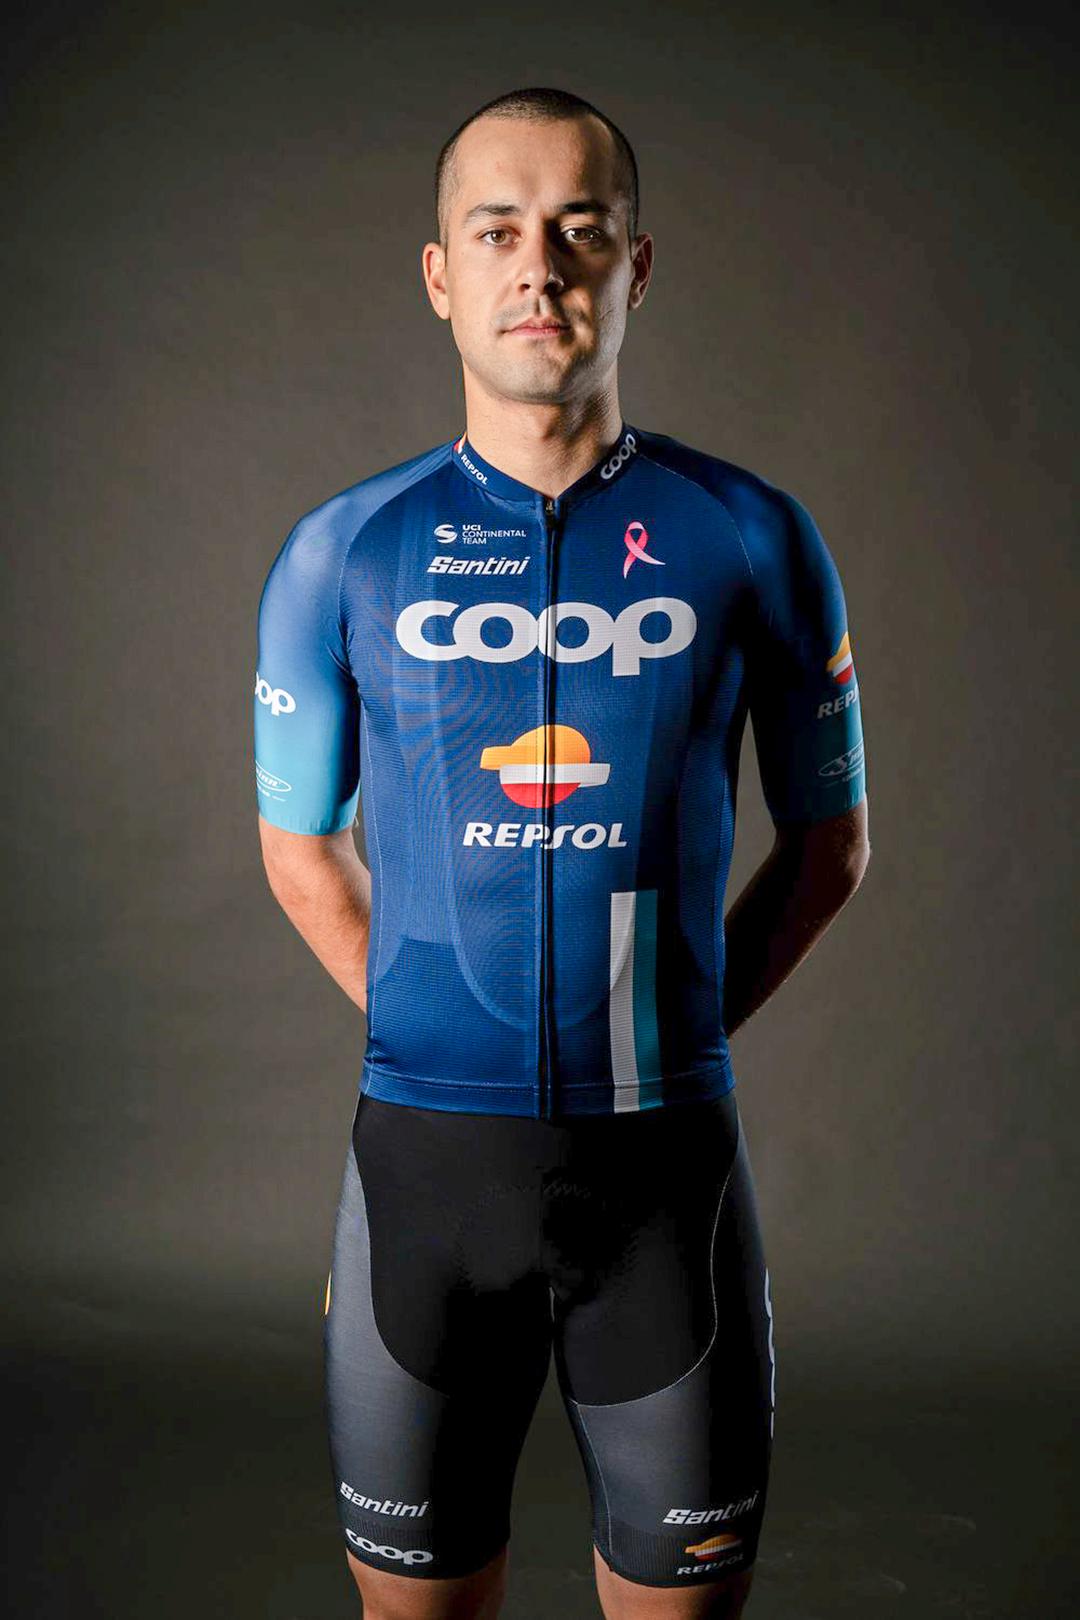 Proffsyklist André Drege (25) døde i sykkelritt